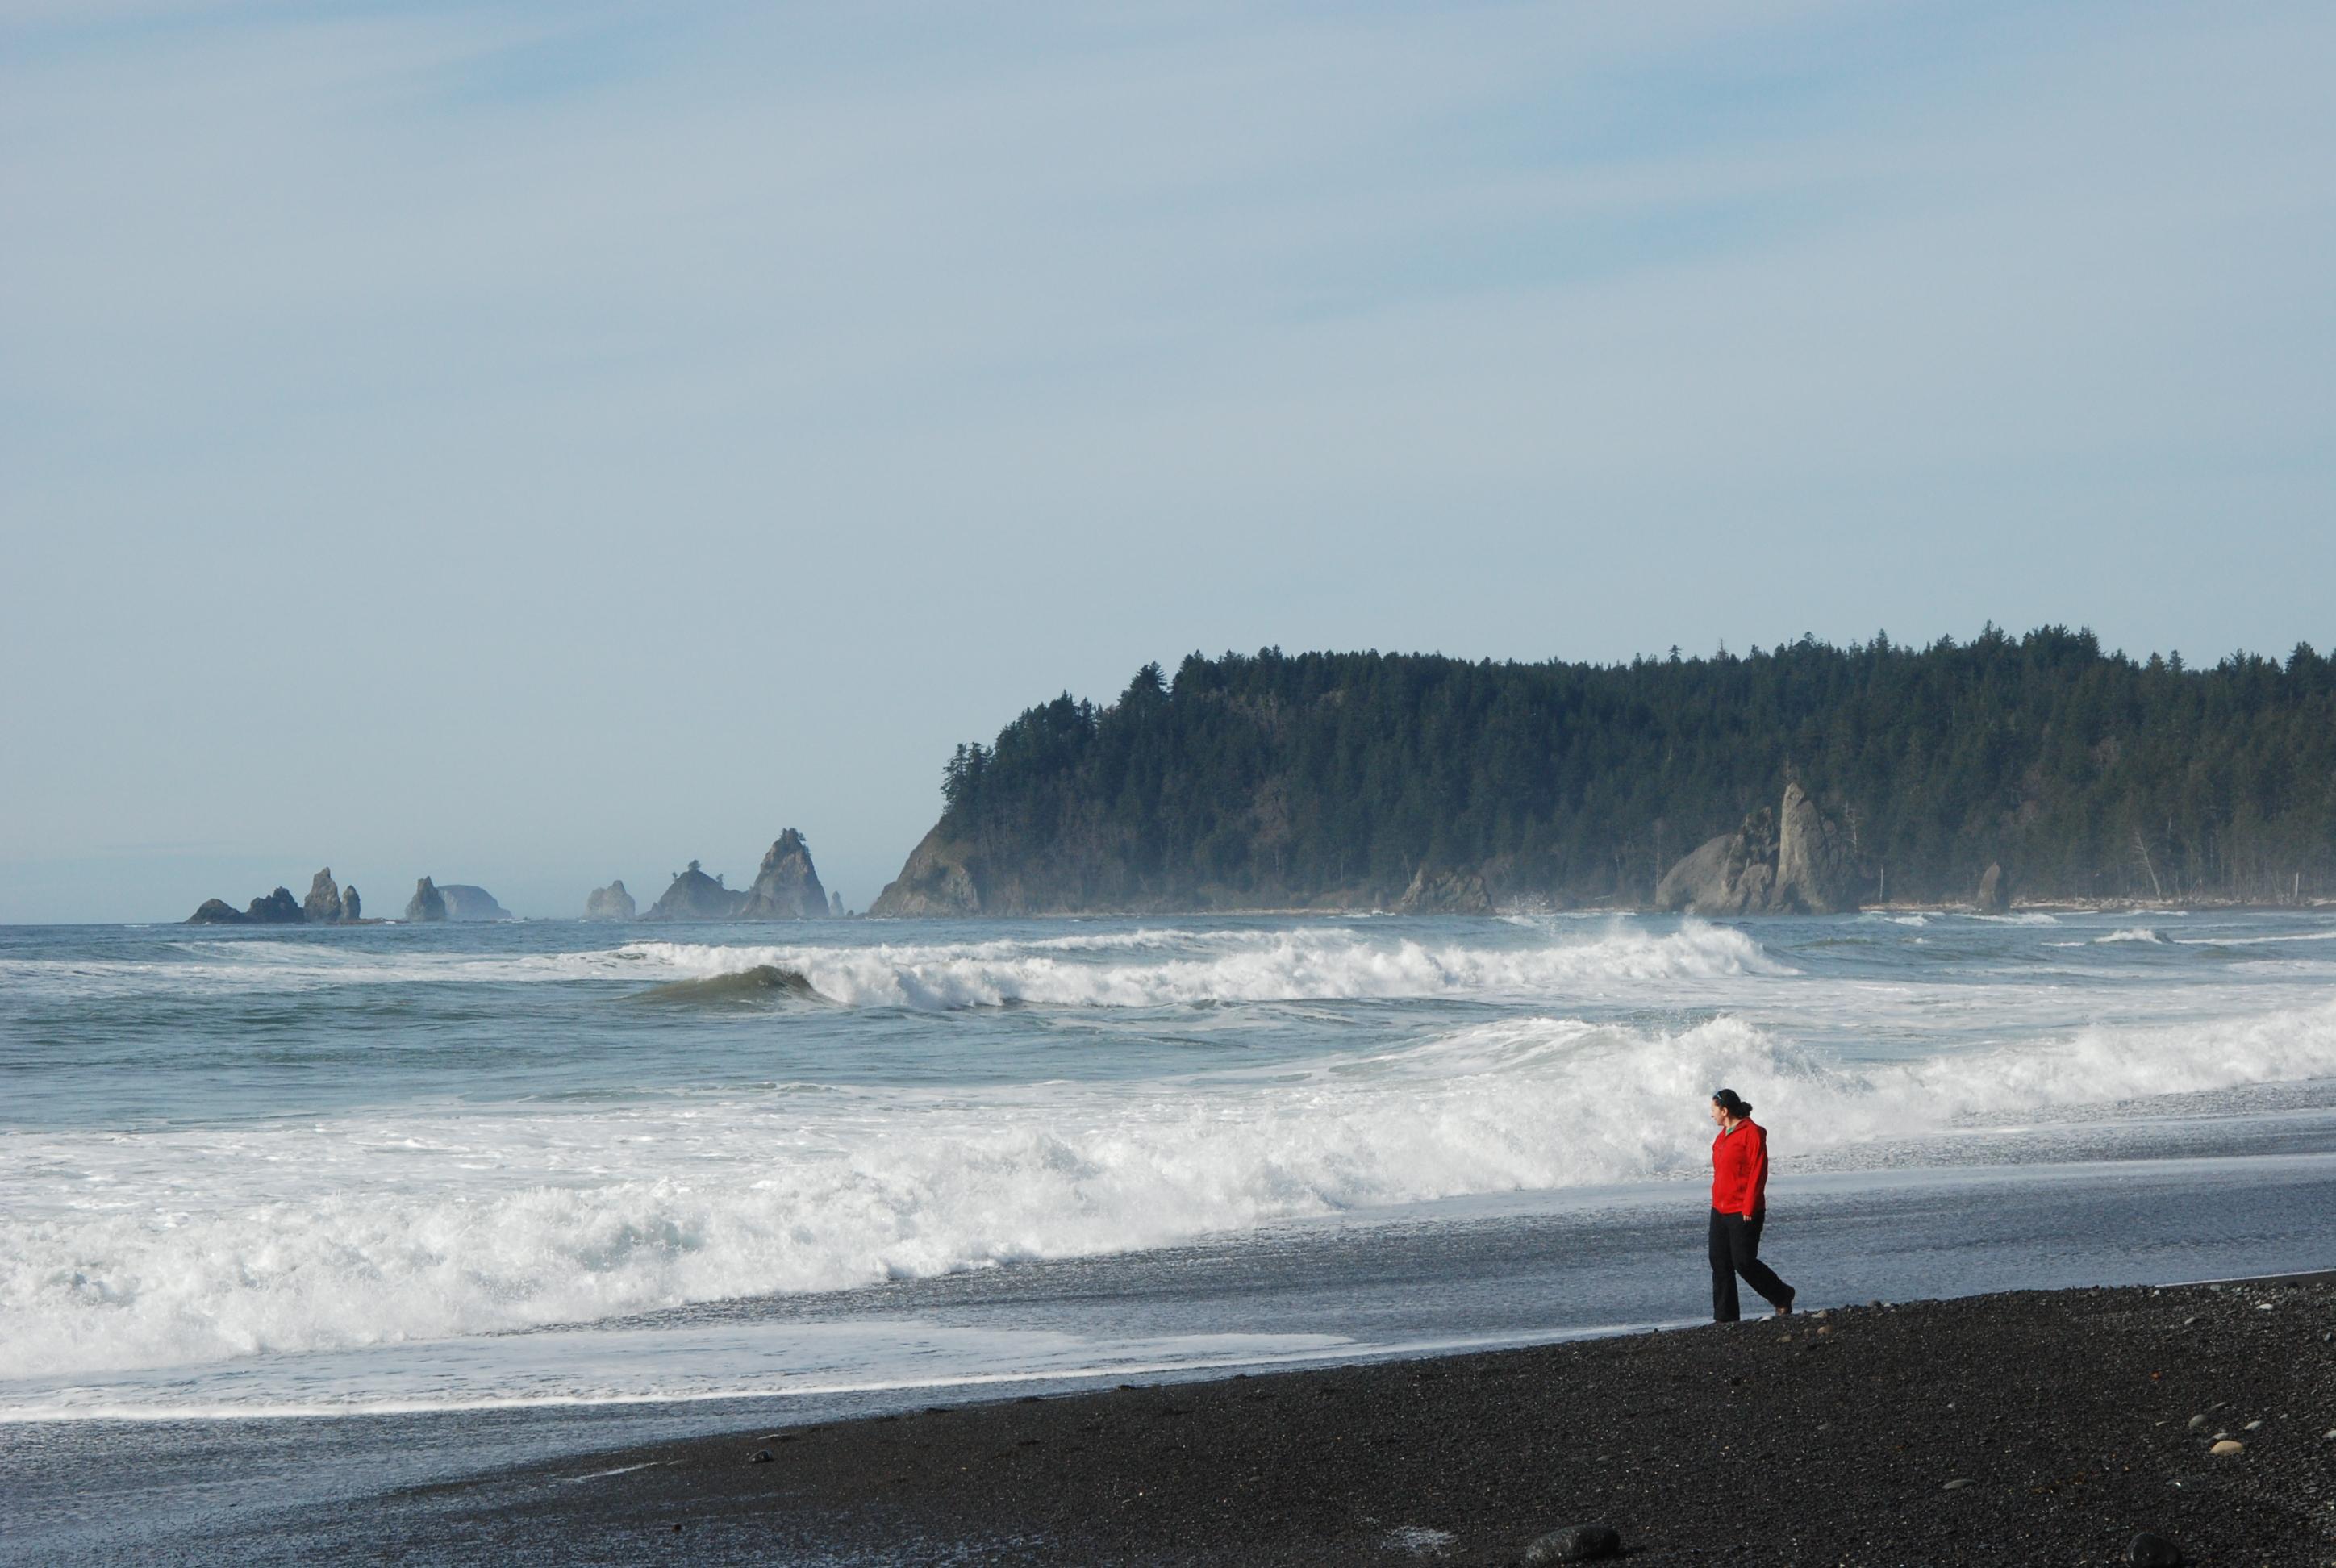 A person walks along a rocky beach.